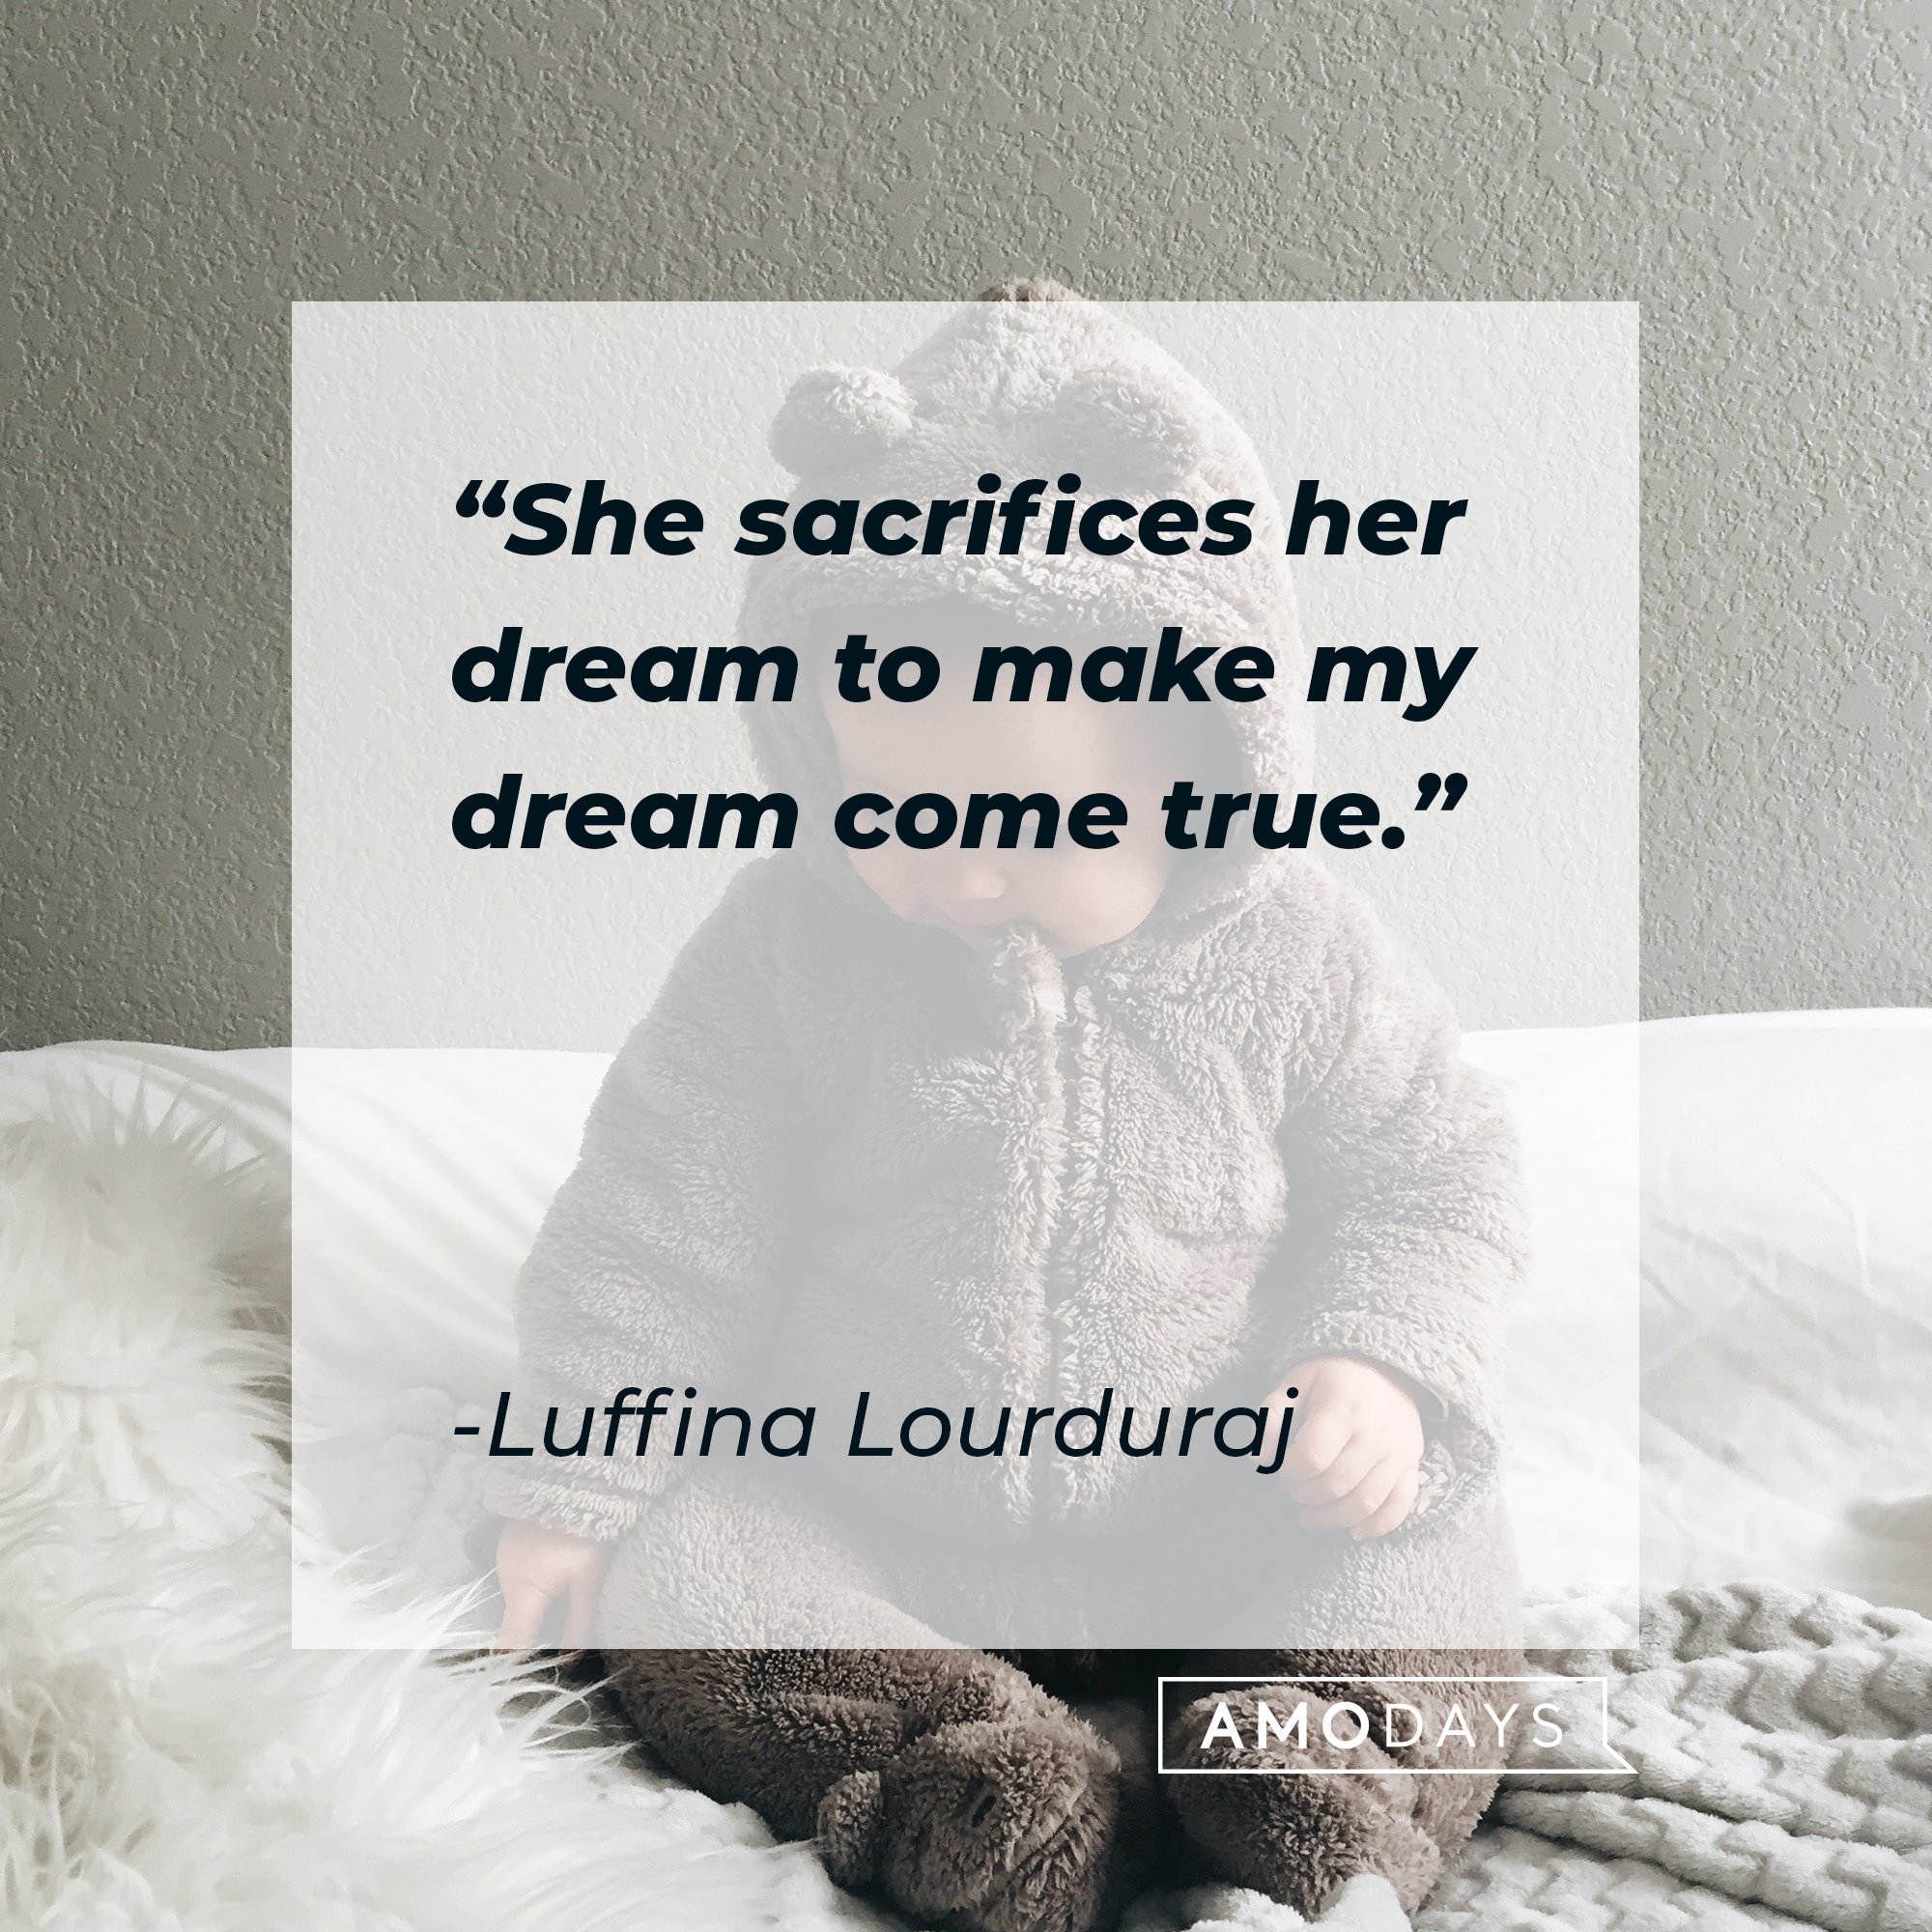 Luffina Lourduraj's quote: "She sacrifices her dream to make my dream come true." | Image: AmoDays